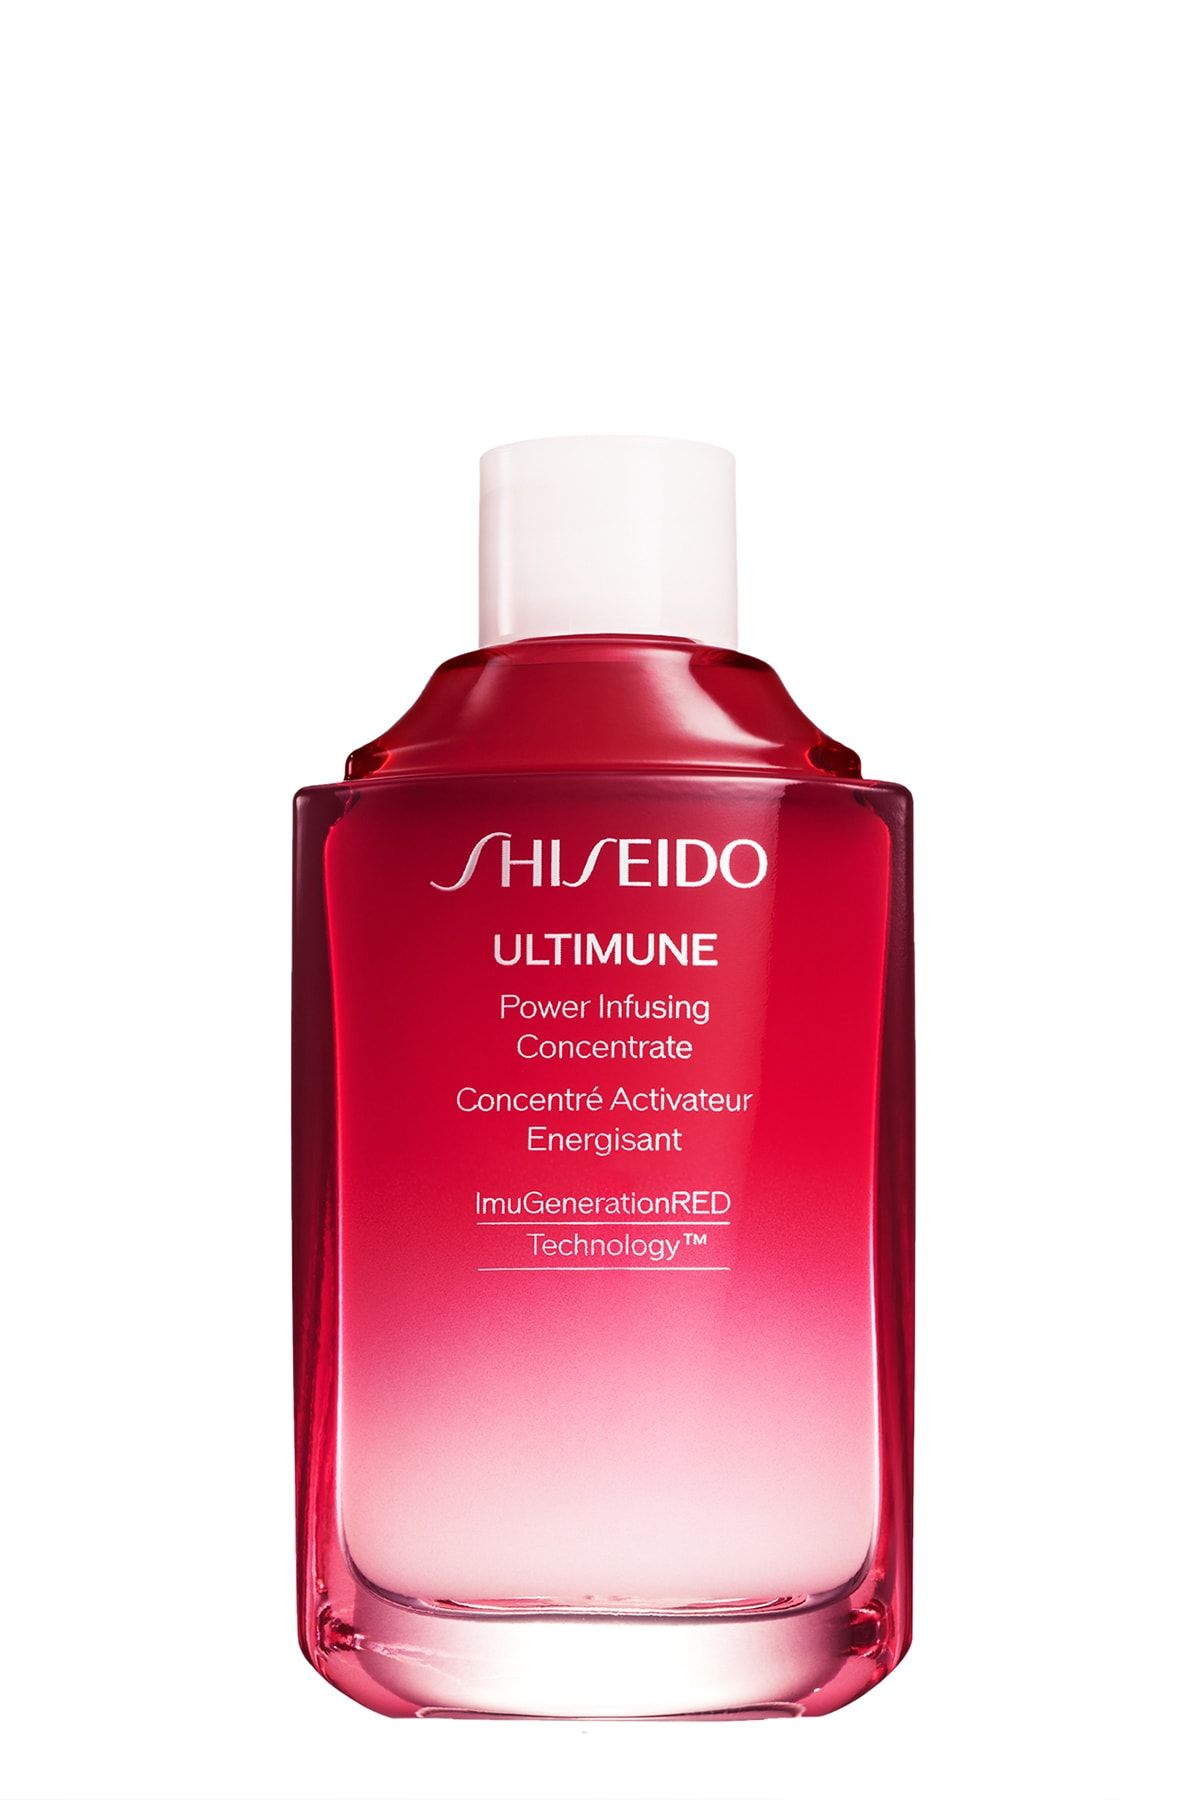 Shiseido Ultimune концентрат. Ultimune концентрат шисейдо Power infusing. Shiseido Ultimune Power infusing Concentrate 3.0 Refill. Shiseido Ultimune концентрат хранение. Shiseido ultimune power infusing concentrate